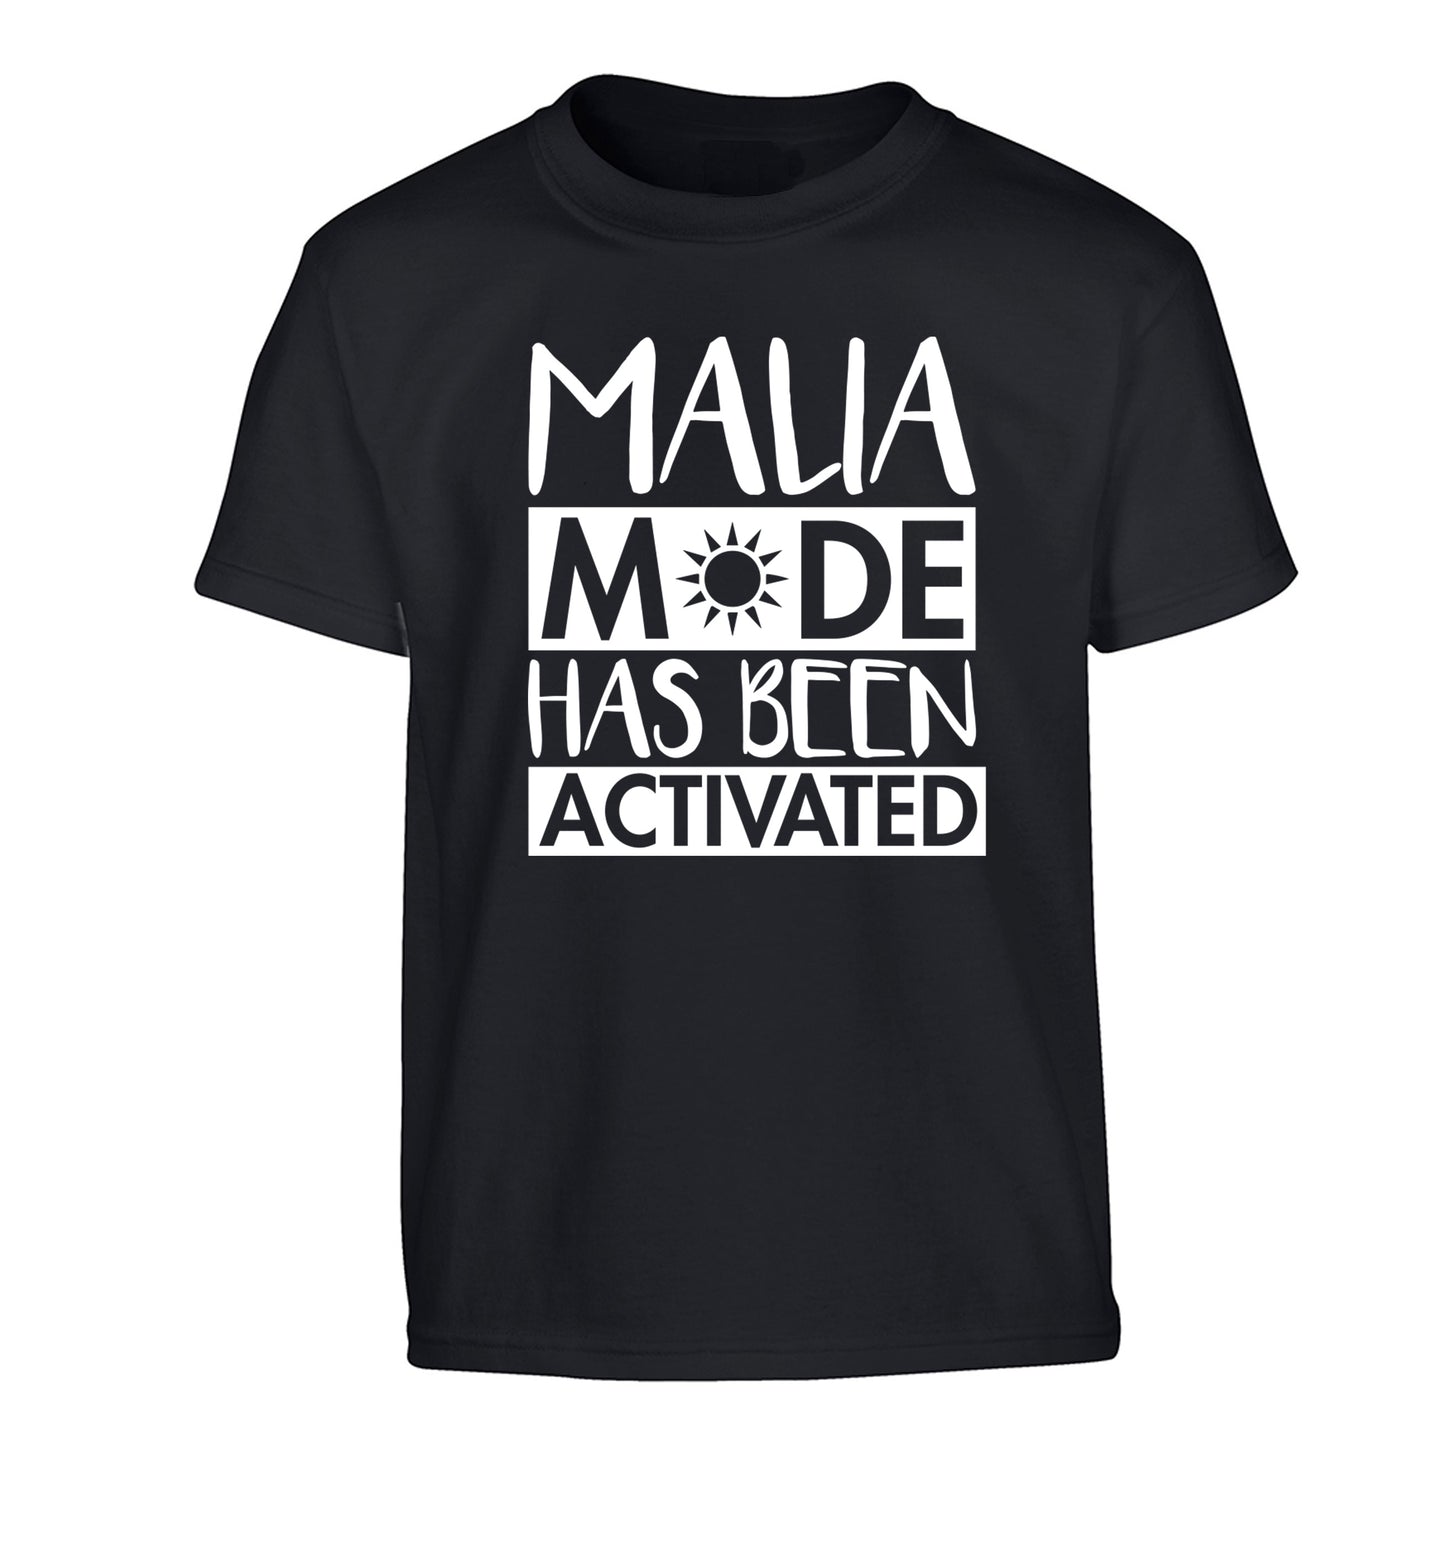 Malia mode has been activated Children's black Tshirt 12-13 Years